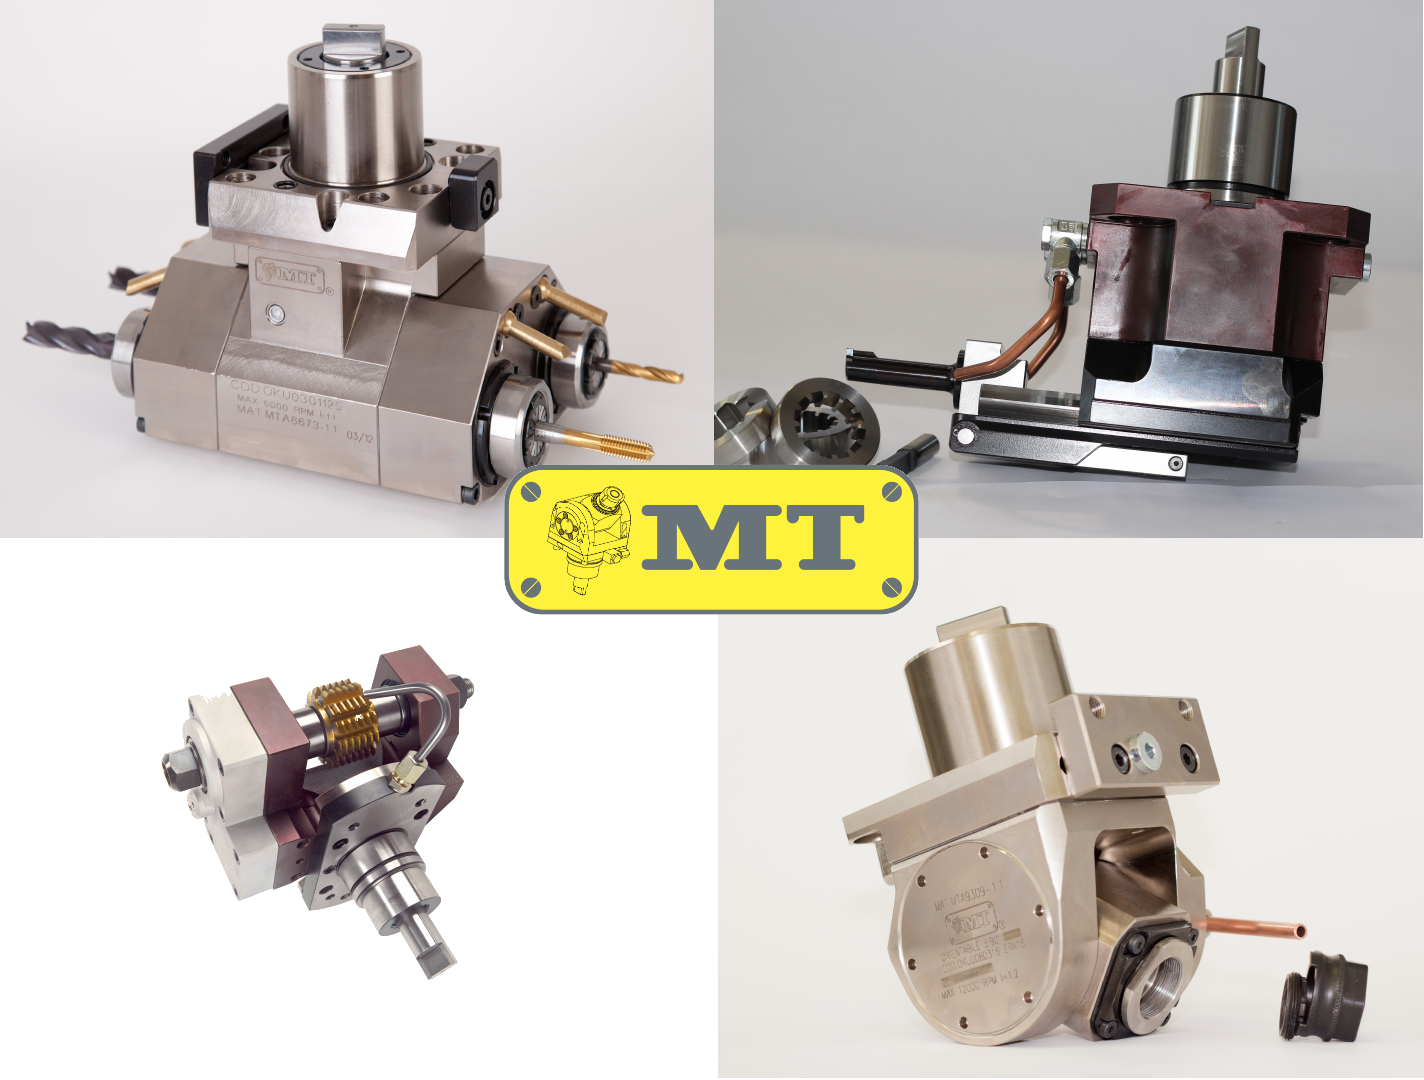 MT Marchetti - tool holder range